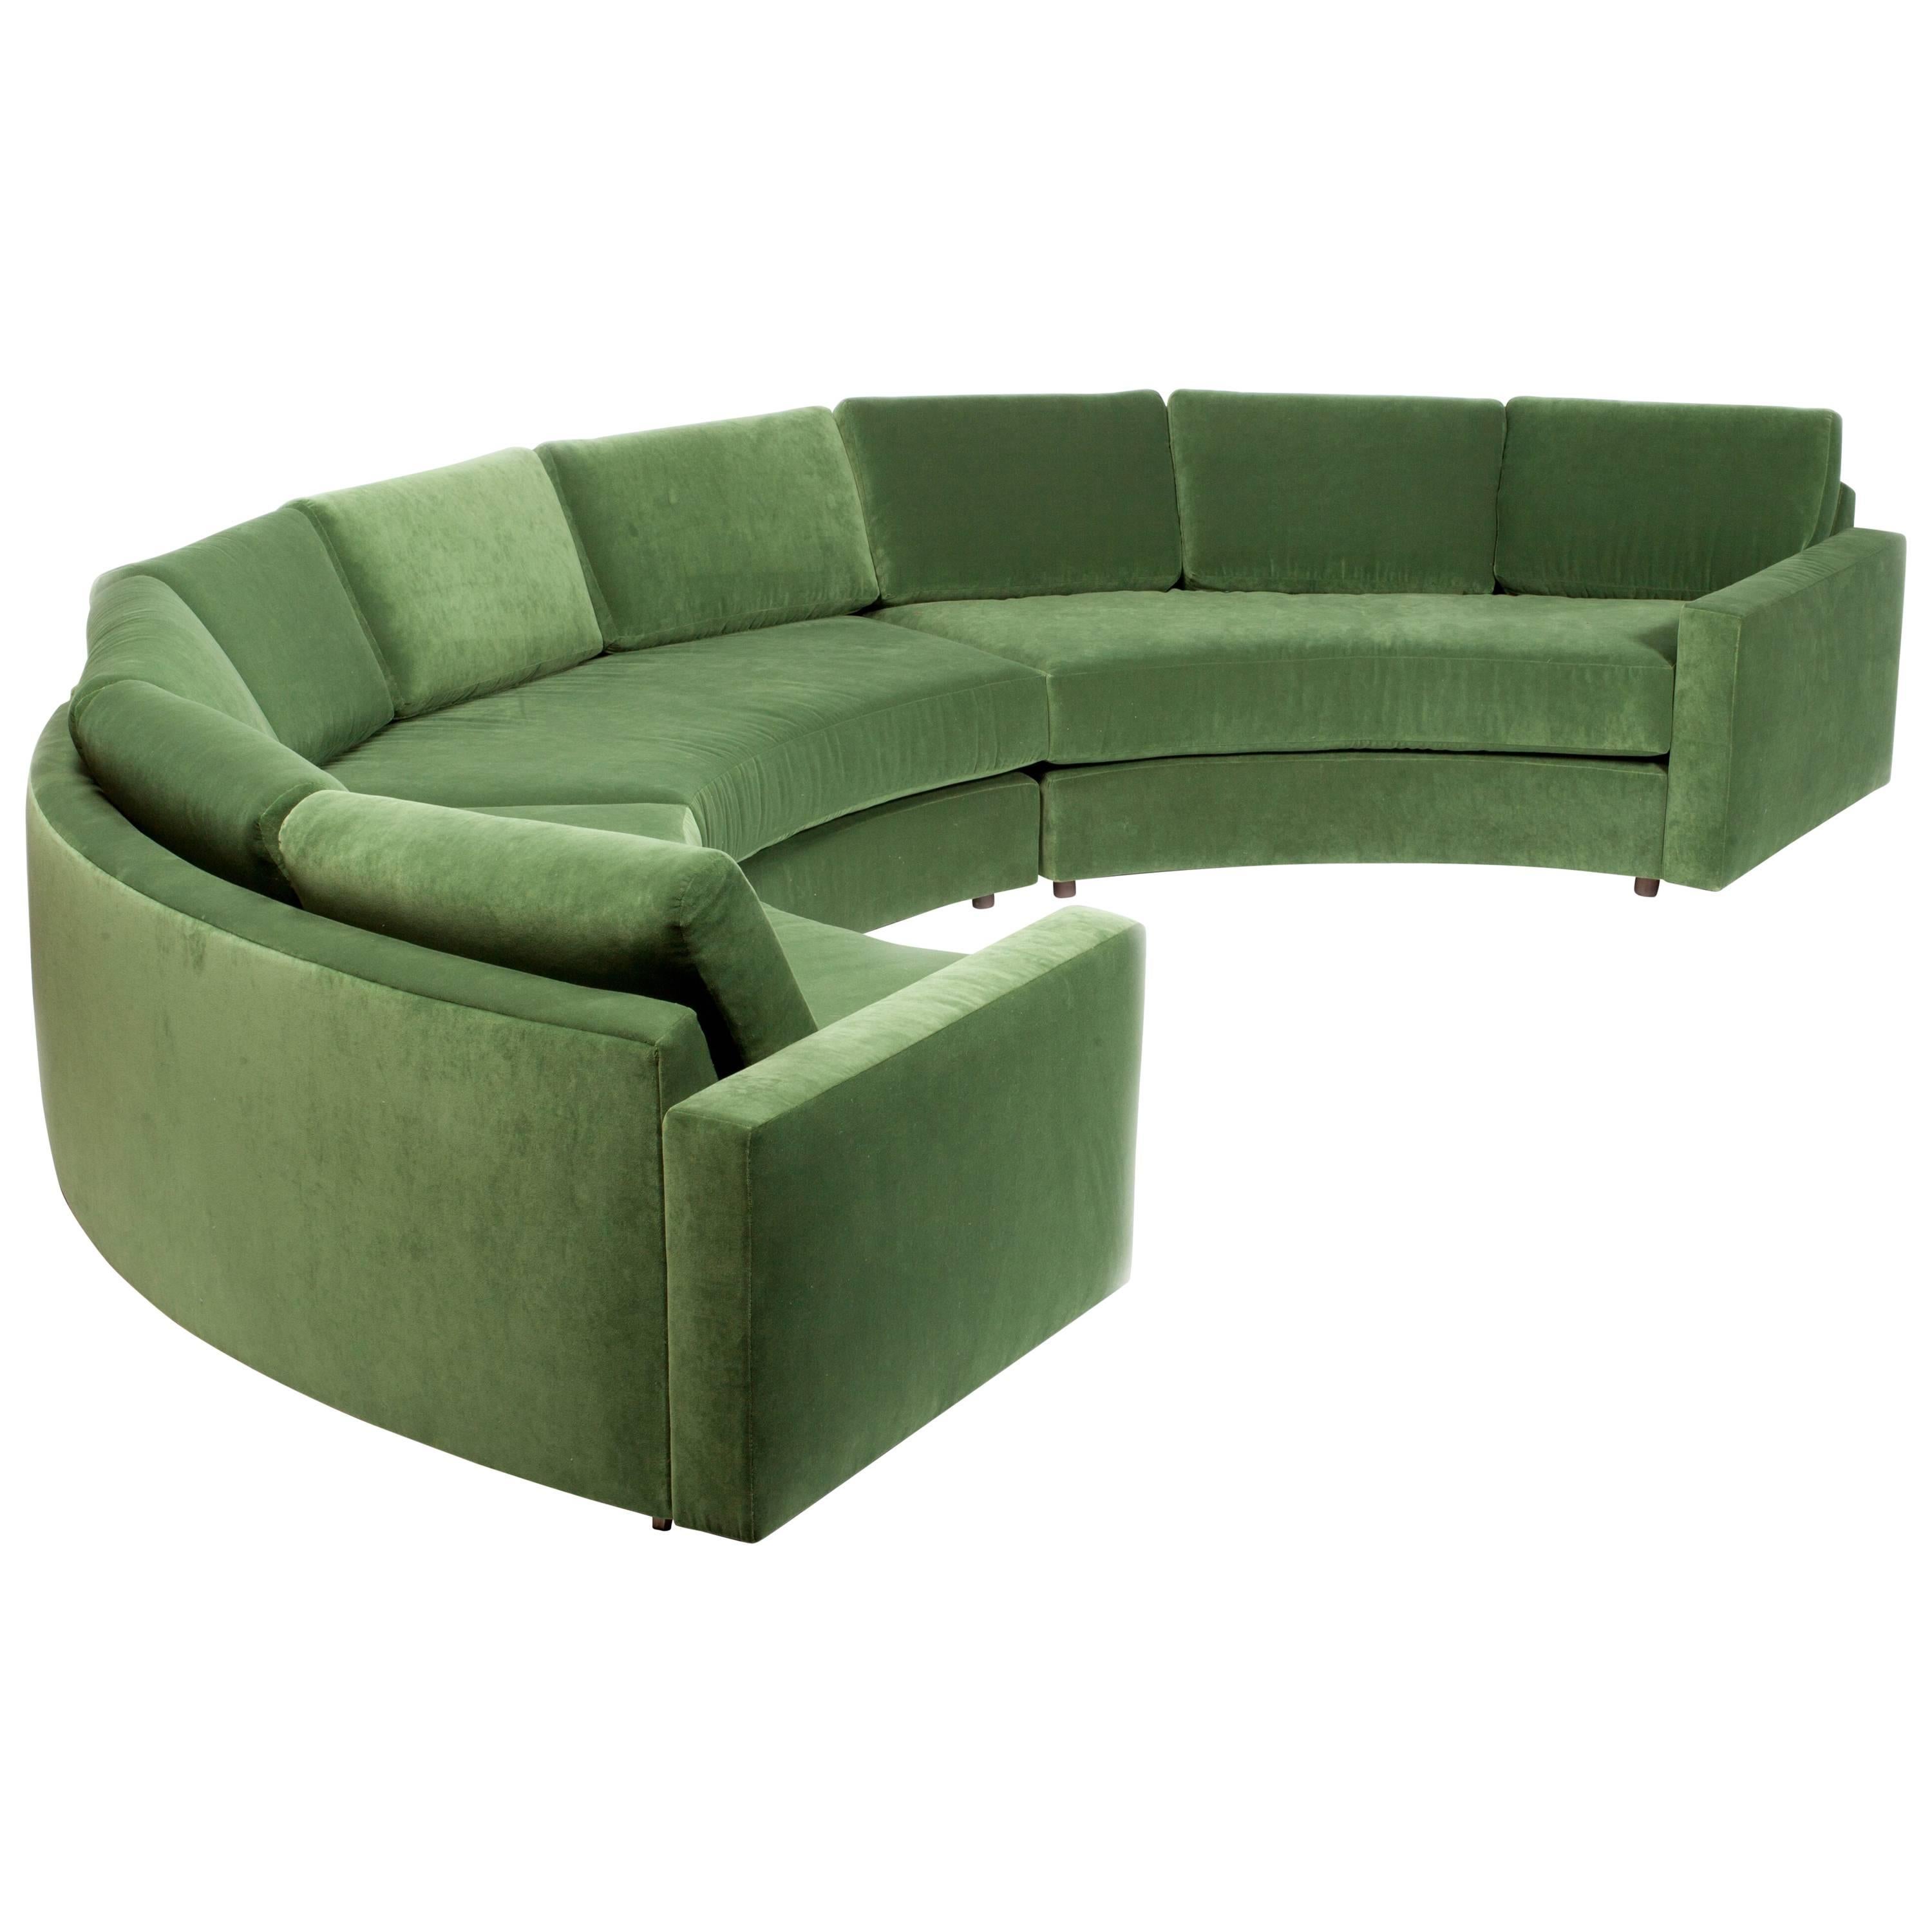 Large Semi Circle Sectional Newly Upholstered in Green Velvet